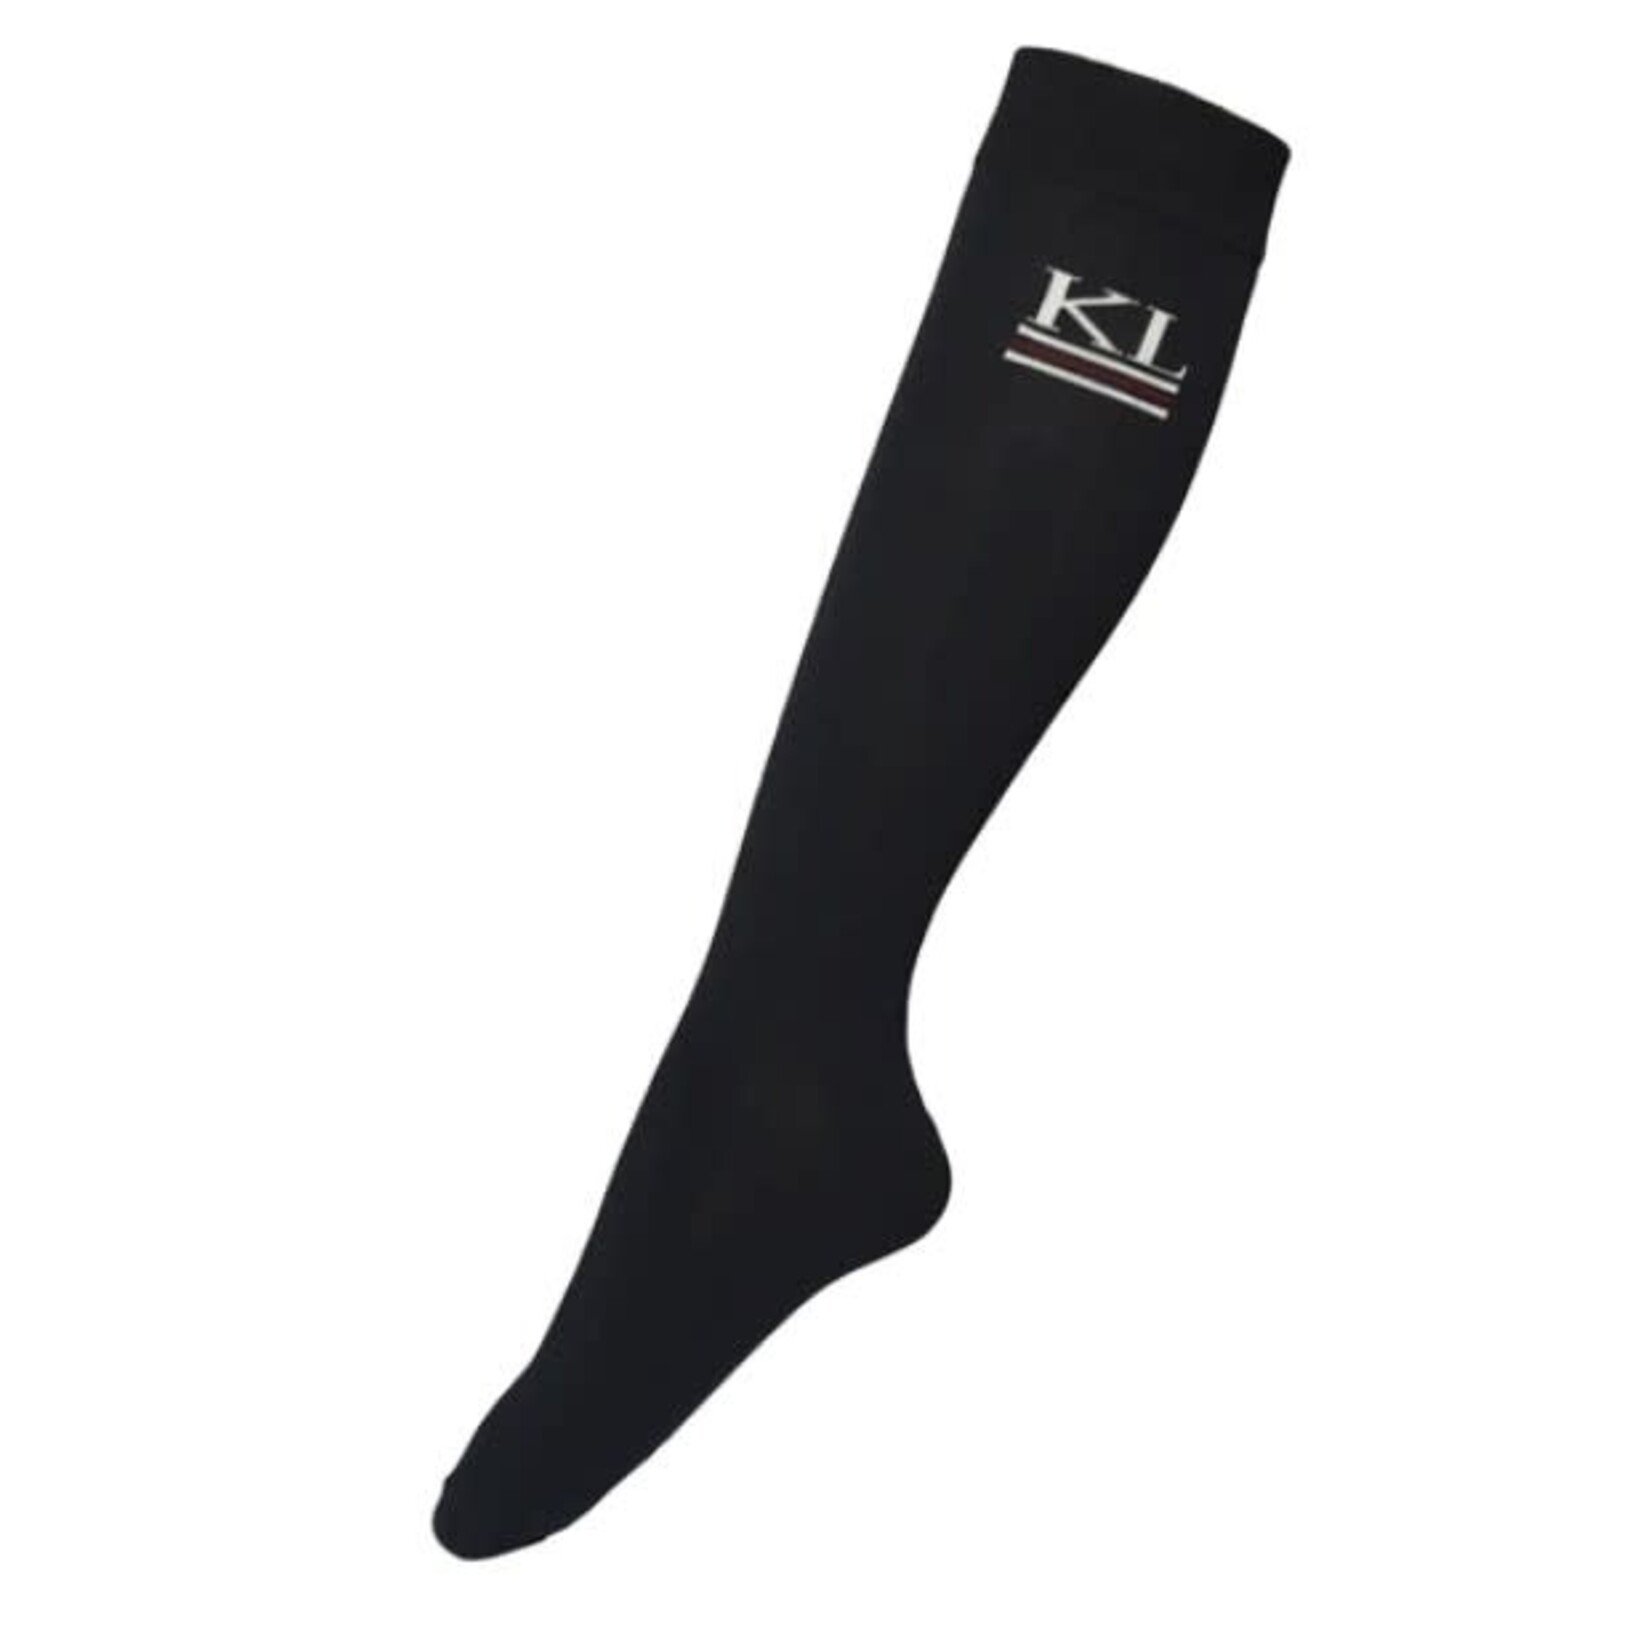 Kingsland KL Lelof Unisex Coolmax Knee Socks Navy